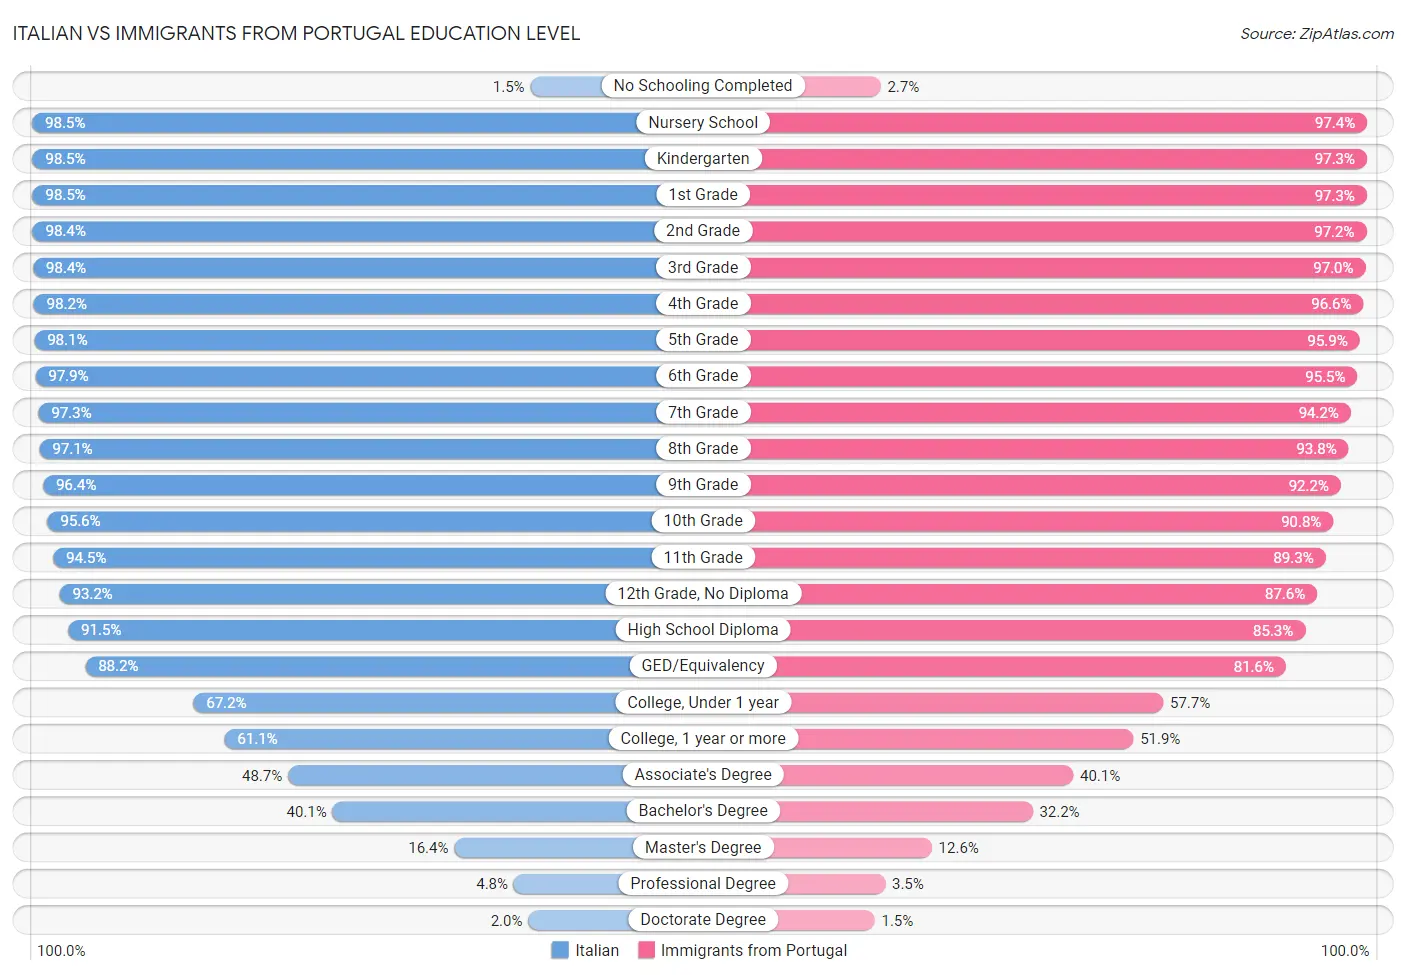 Italian vs Immigrants from Portugal Education Level